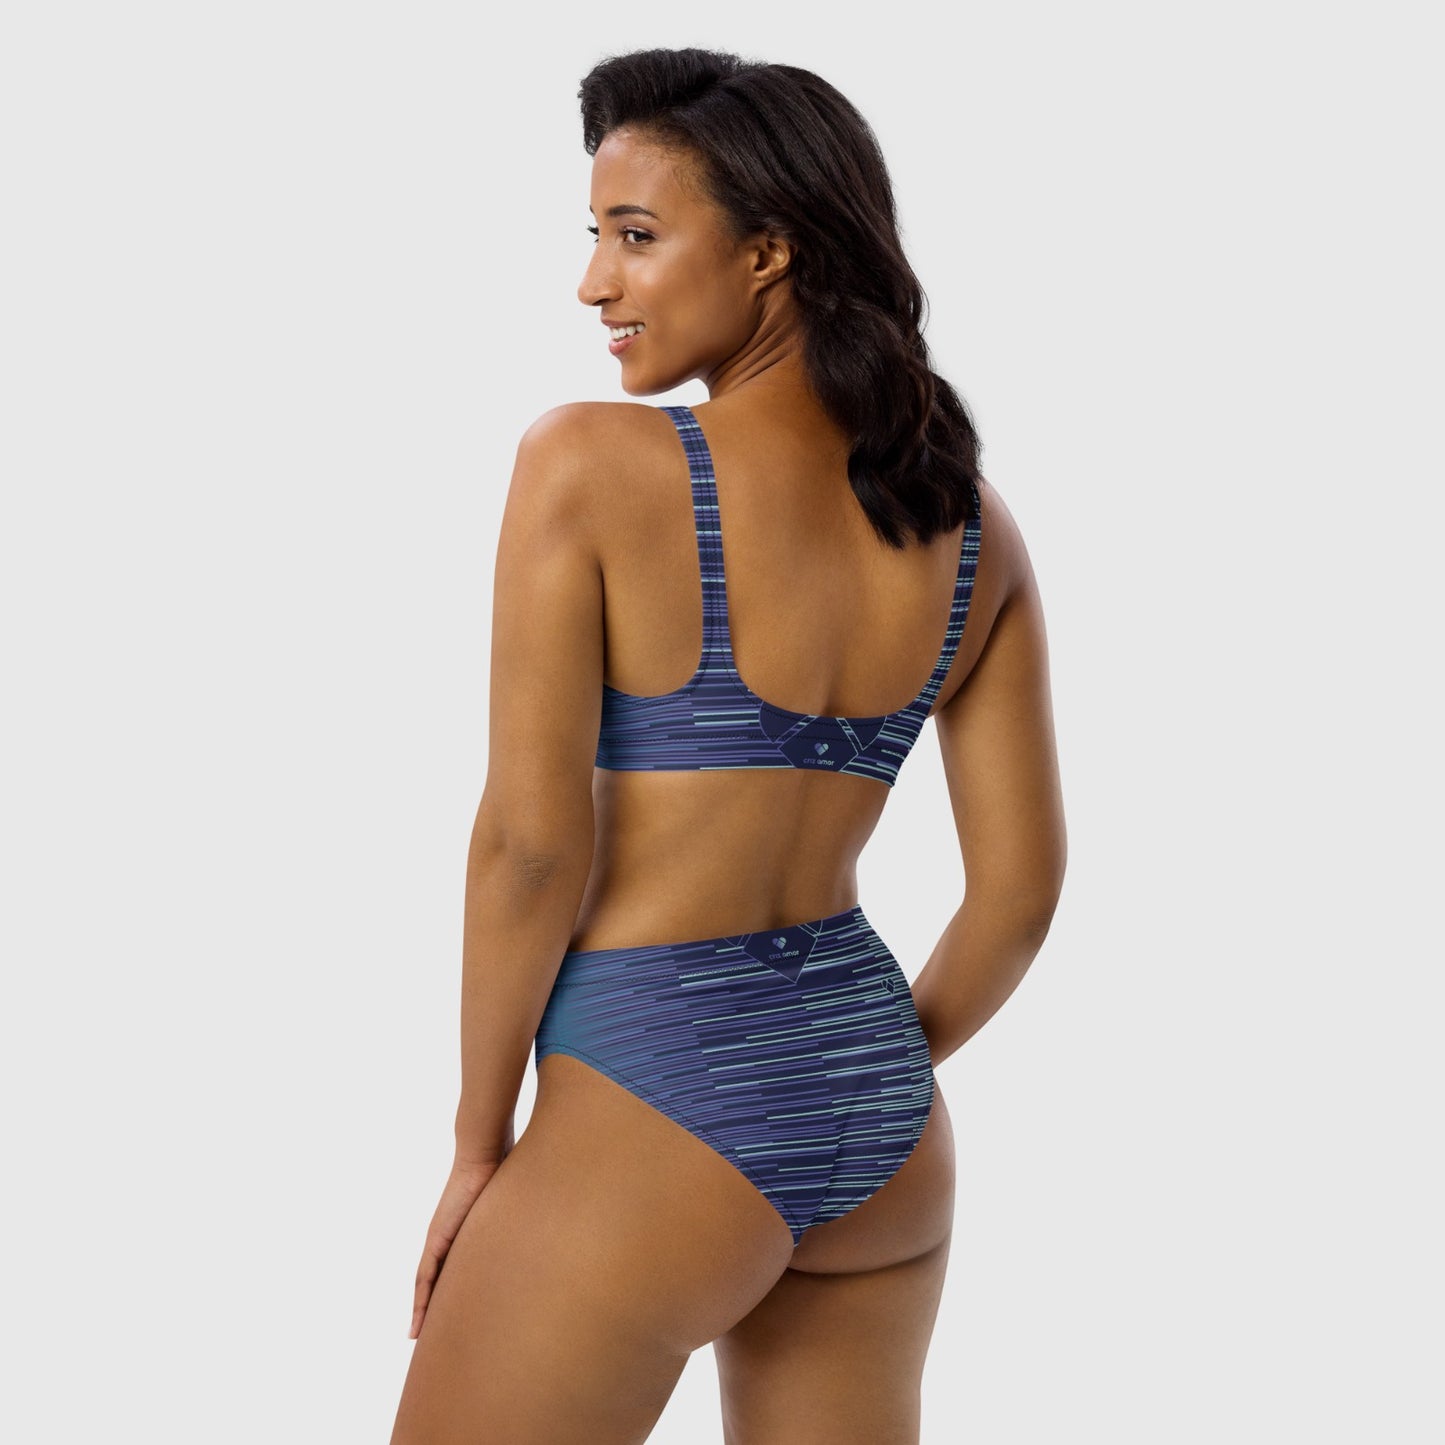 Designer Women's Beachwear - Fusion Stripes Dual Bikini